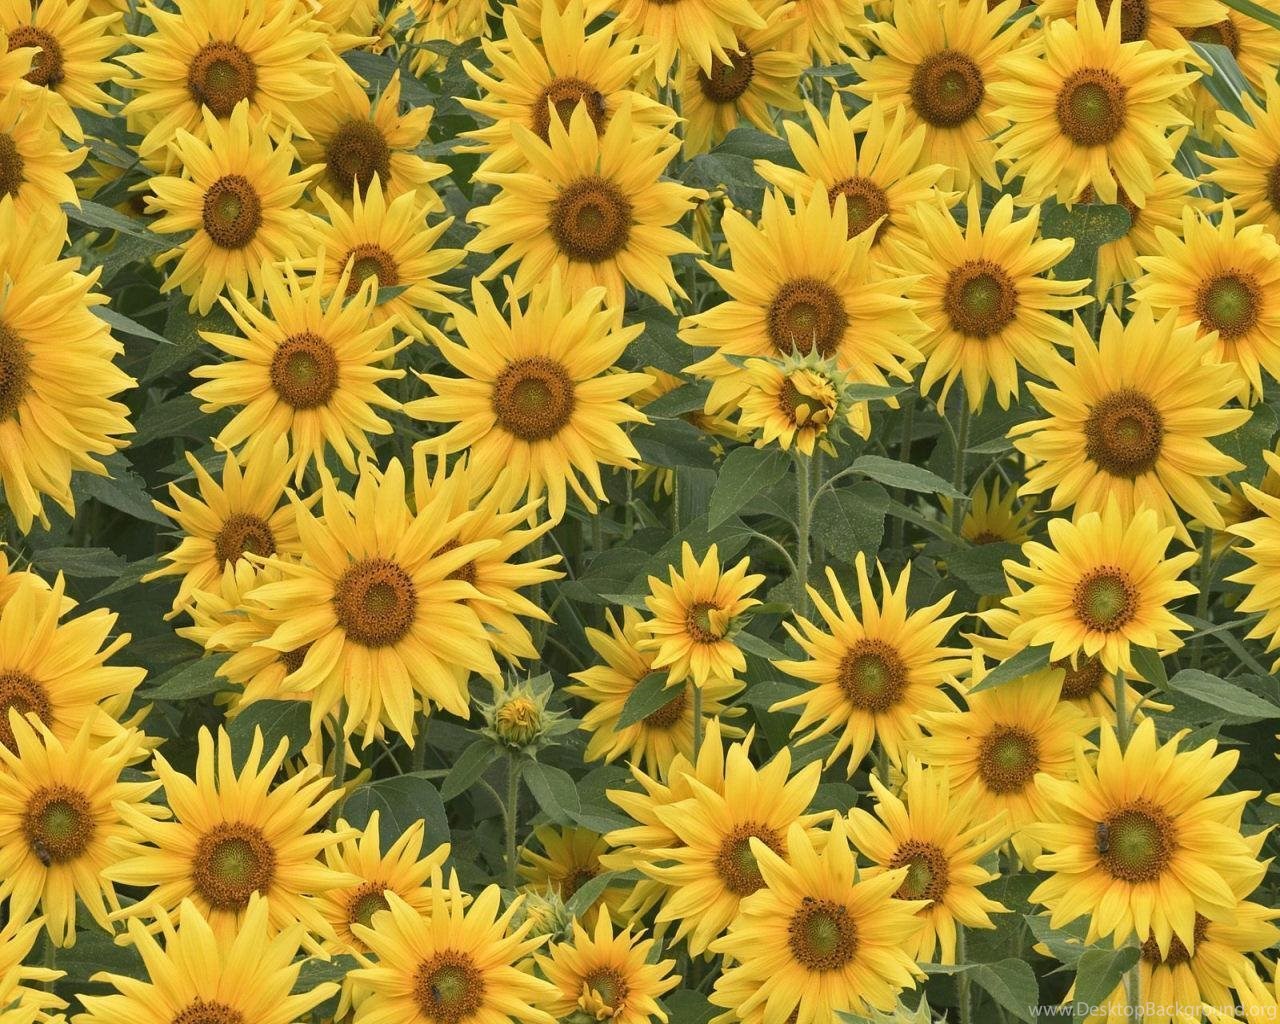 Download Sunflower Tumblr Backgrounds Wallpaper. 